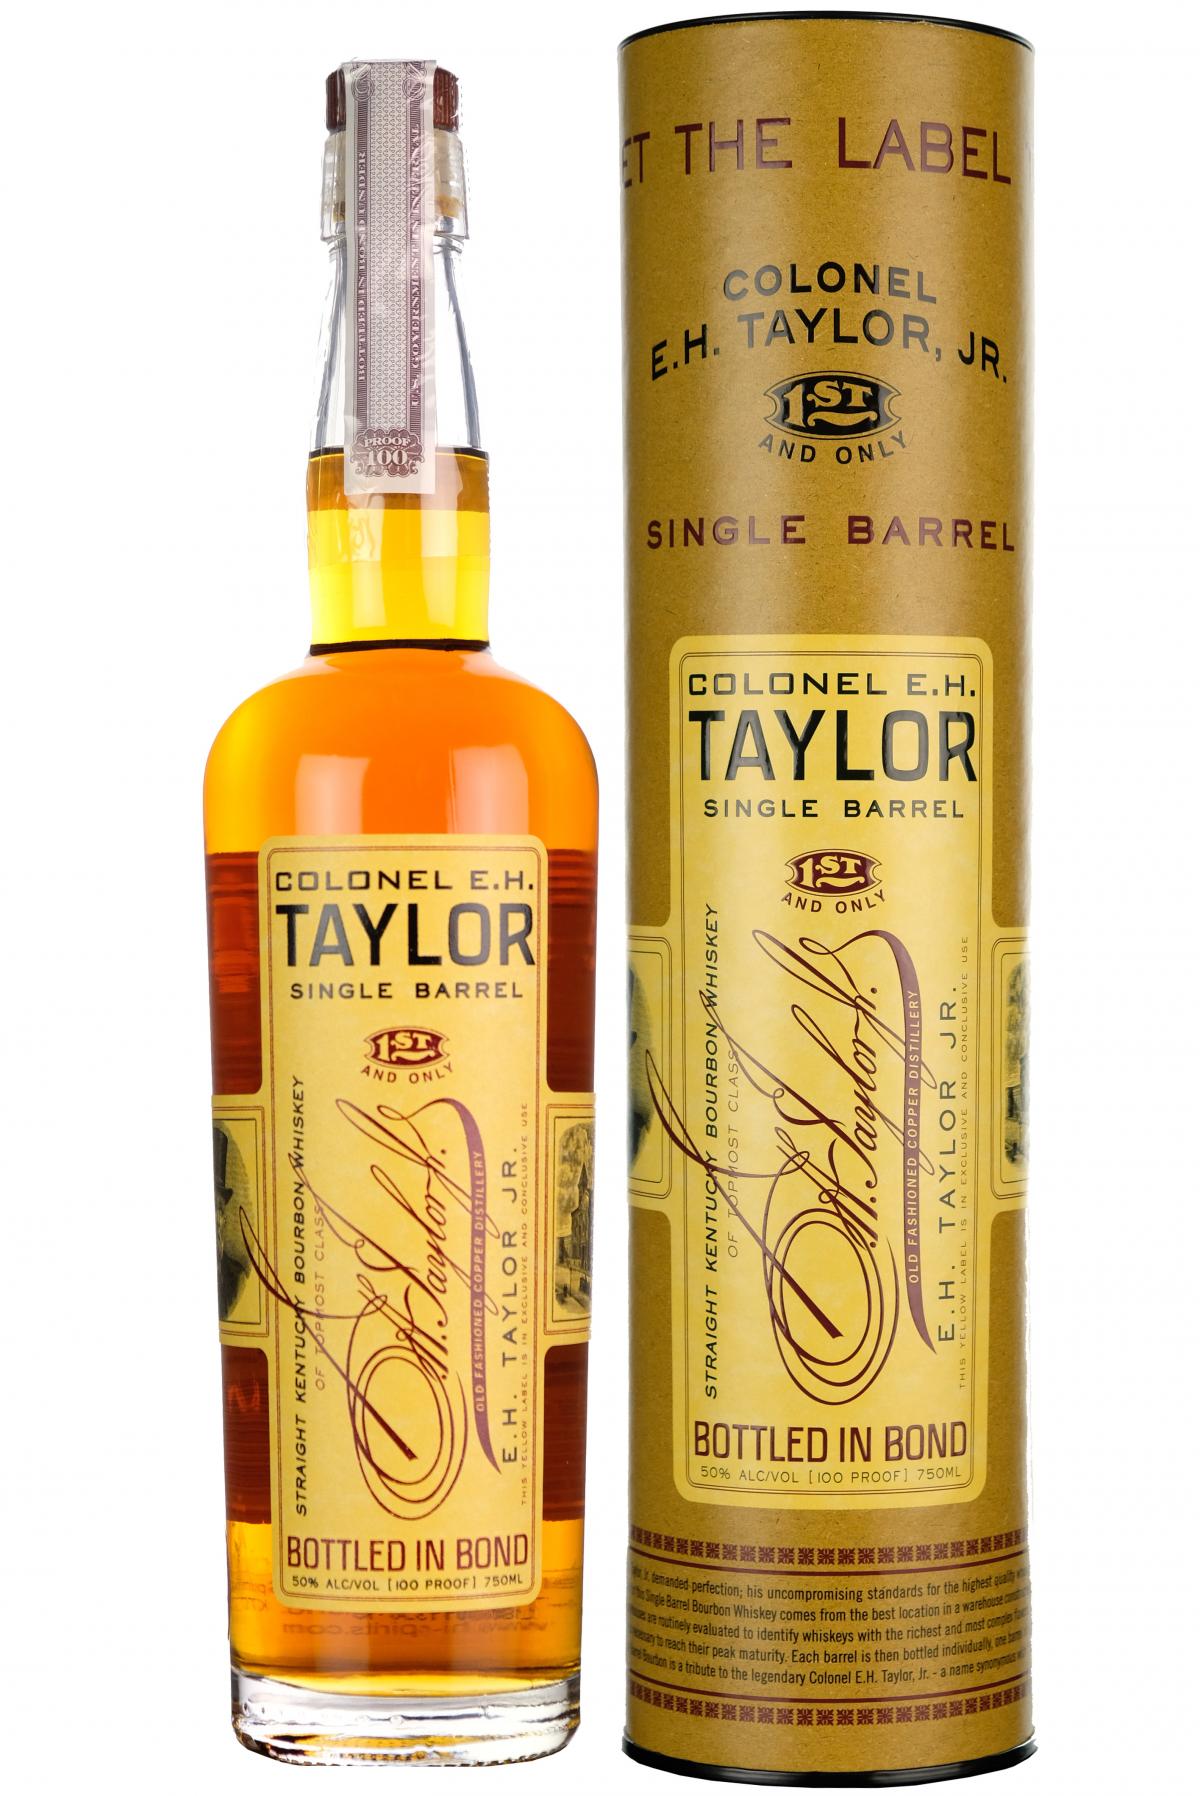 E.H. taylor single barrel, kentucky straight bourbon whiskey